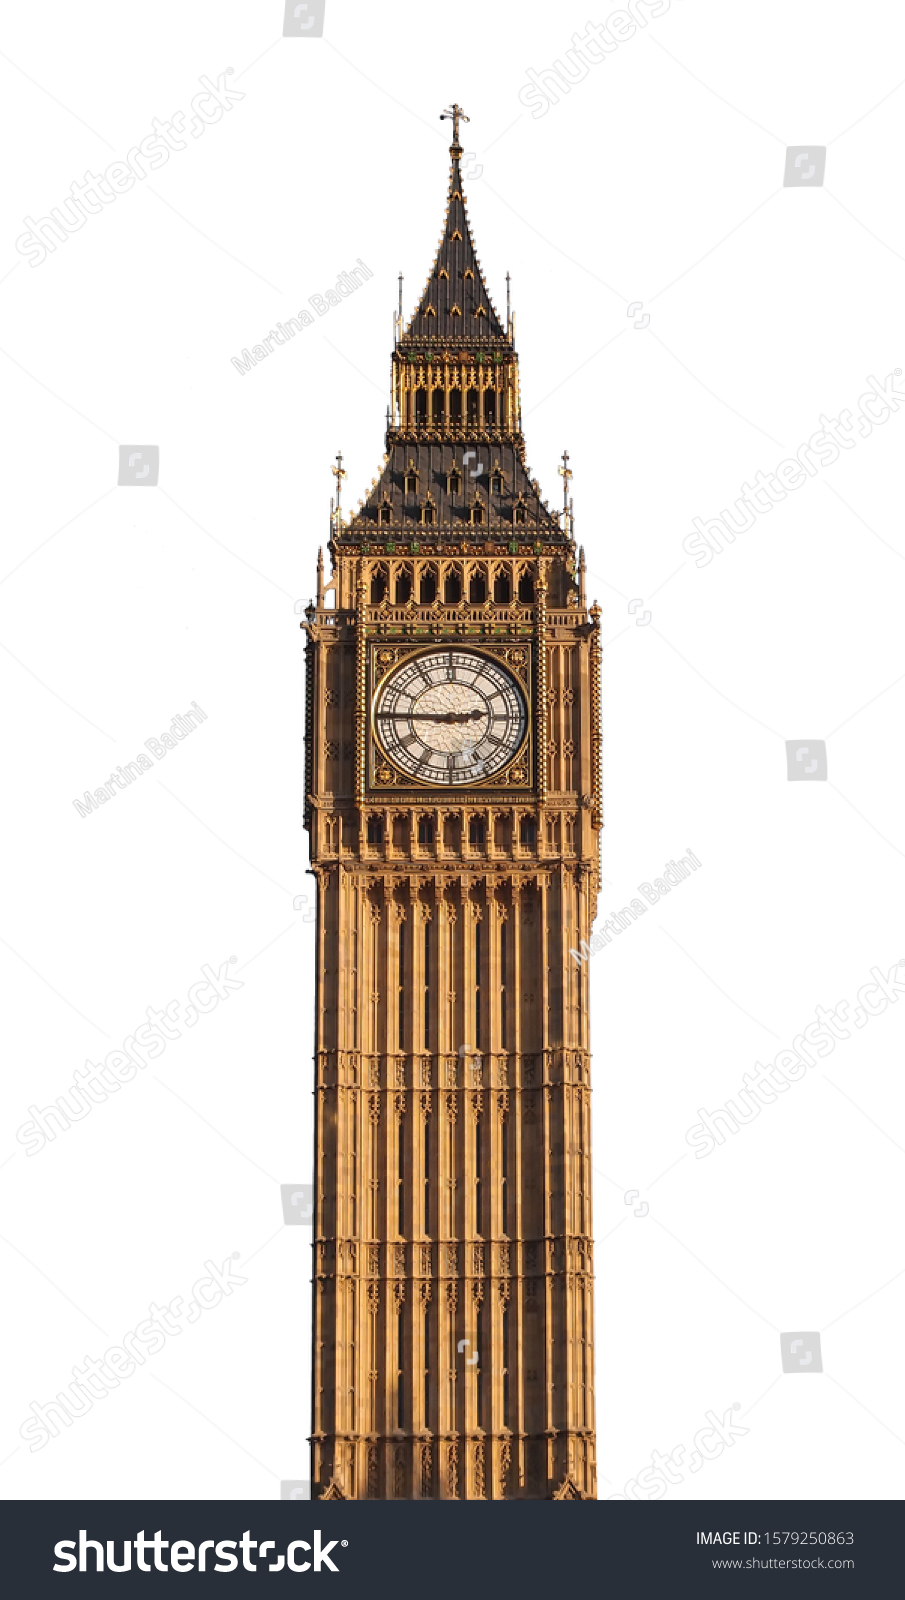 Big Ben tower (London, UK) isolated on white background #1579250863